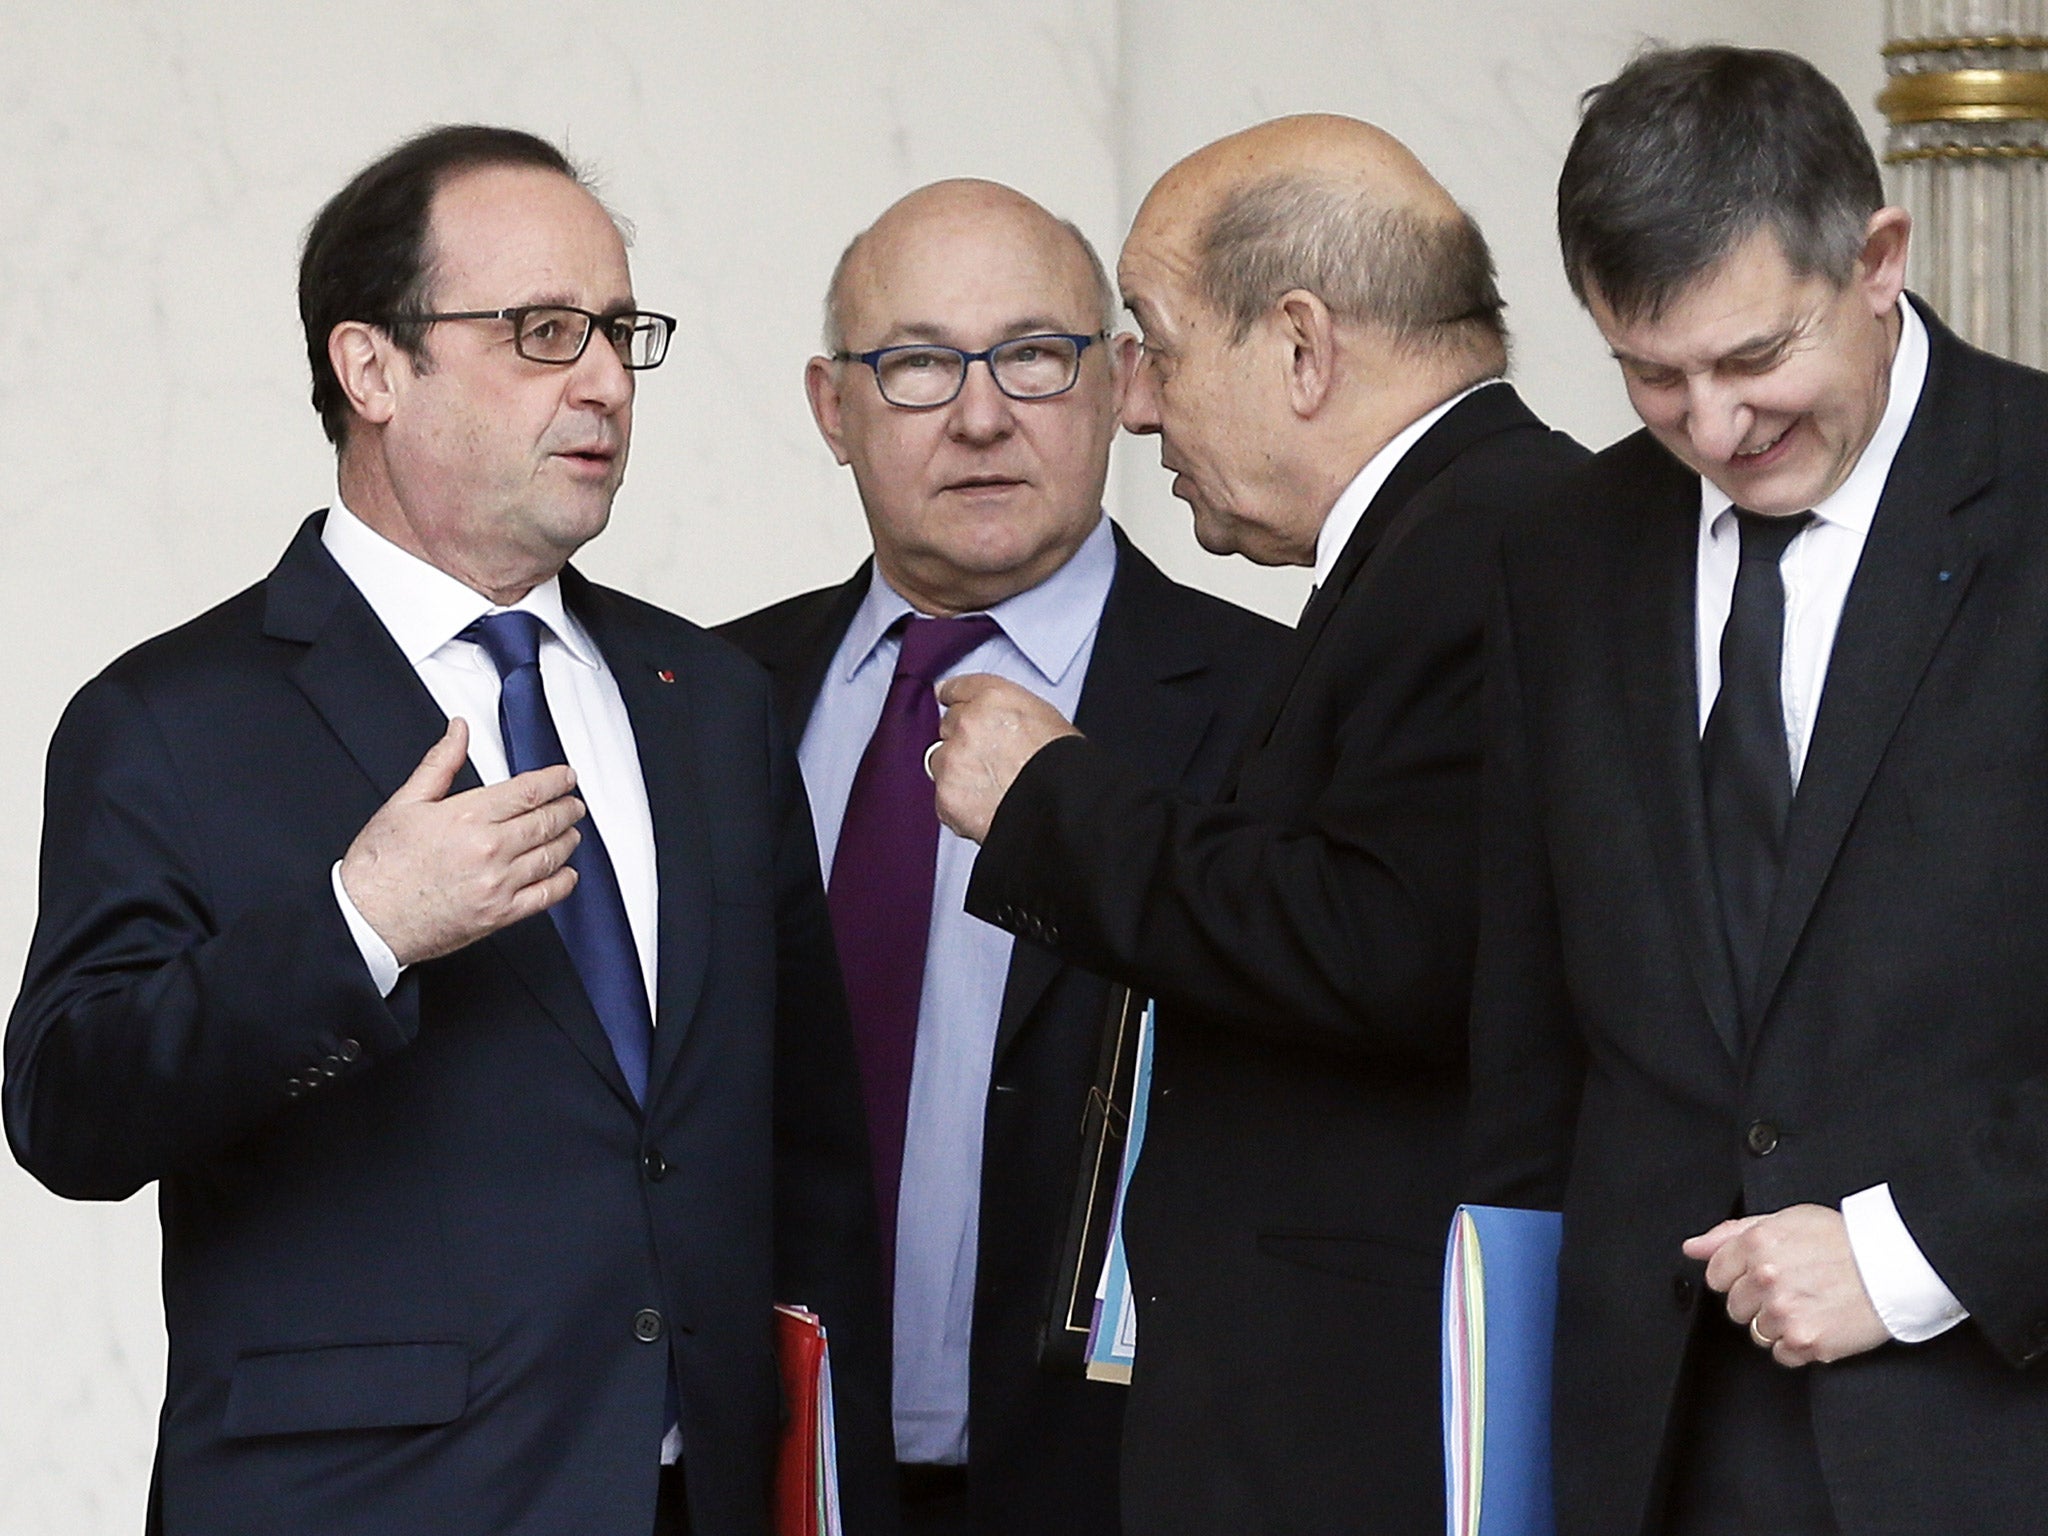 File photo: President François Hollande speaks with senior French politicians